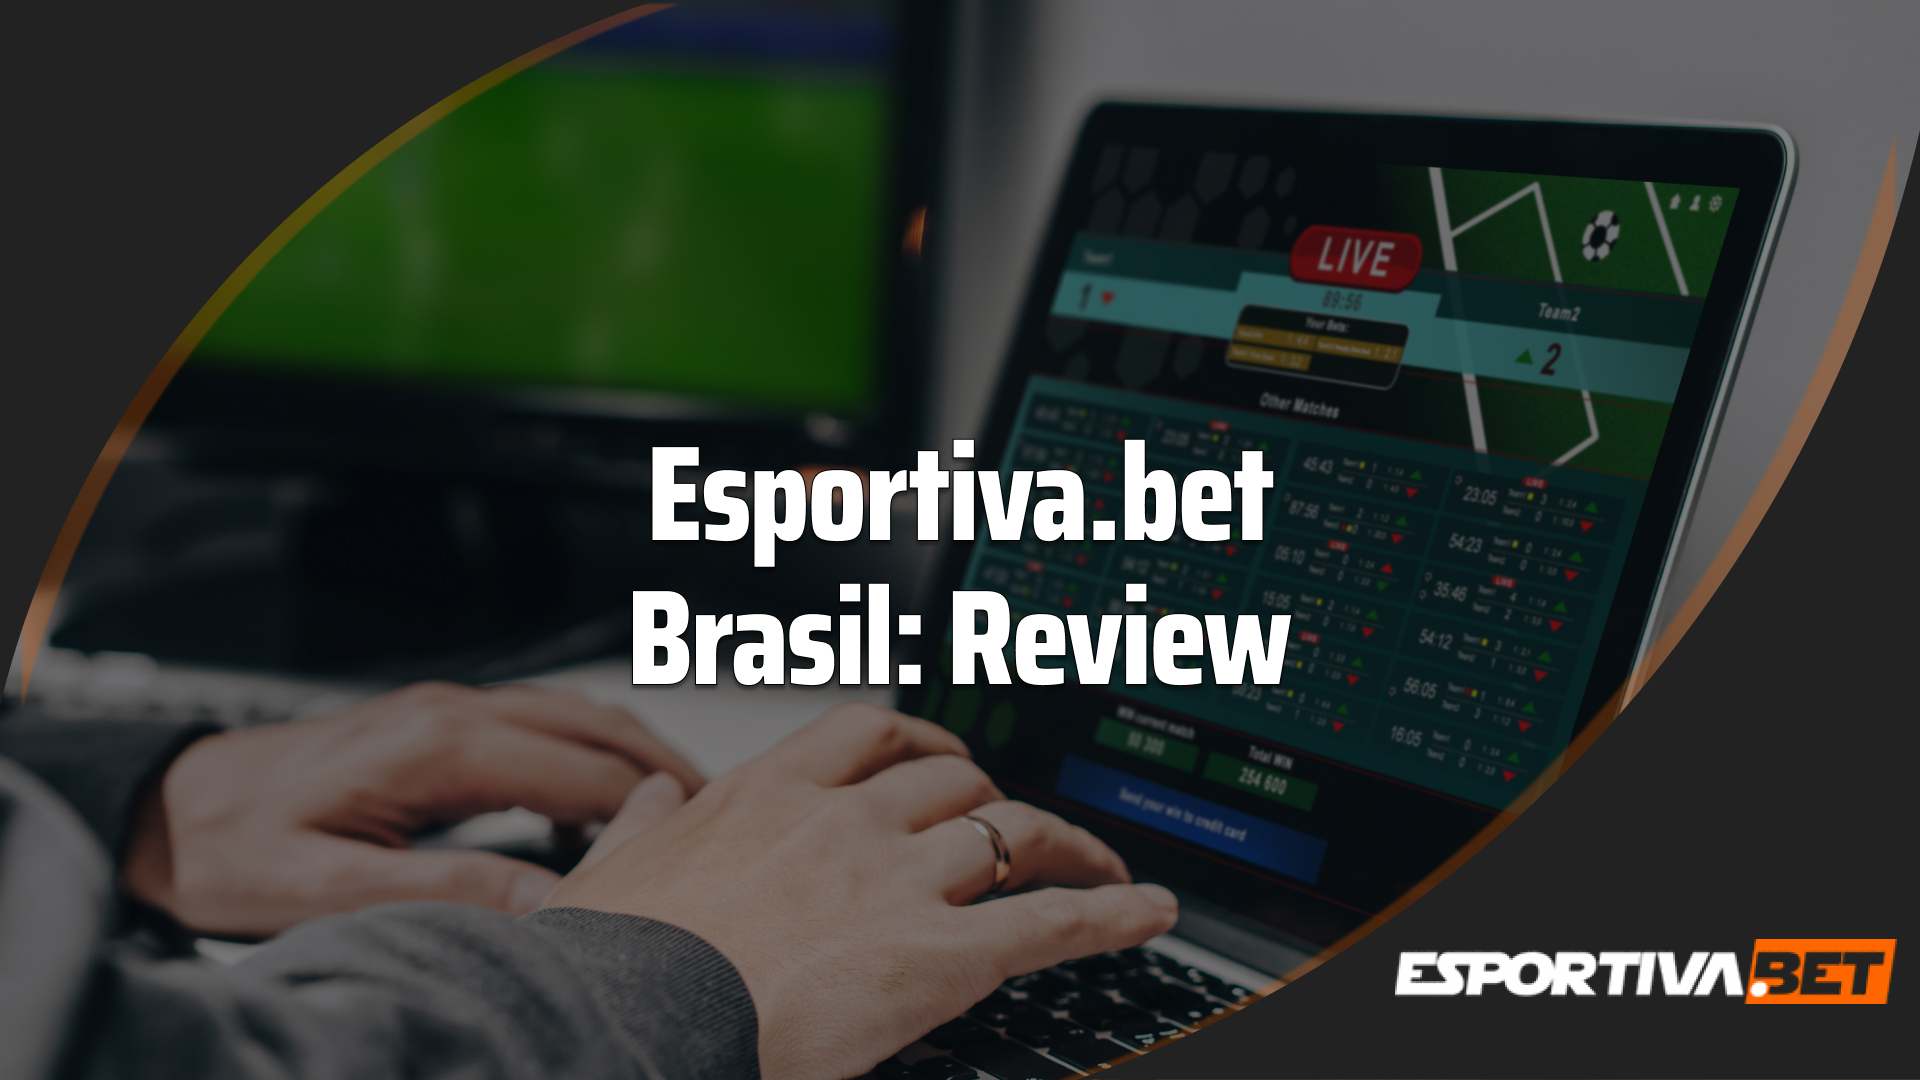 Esportiva.bet Brasil Review